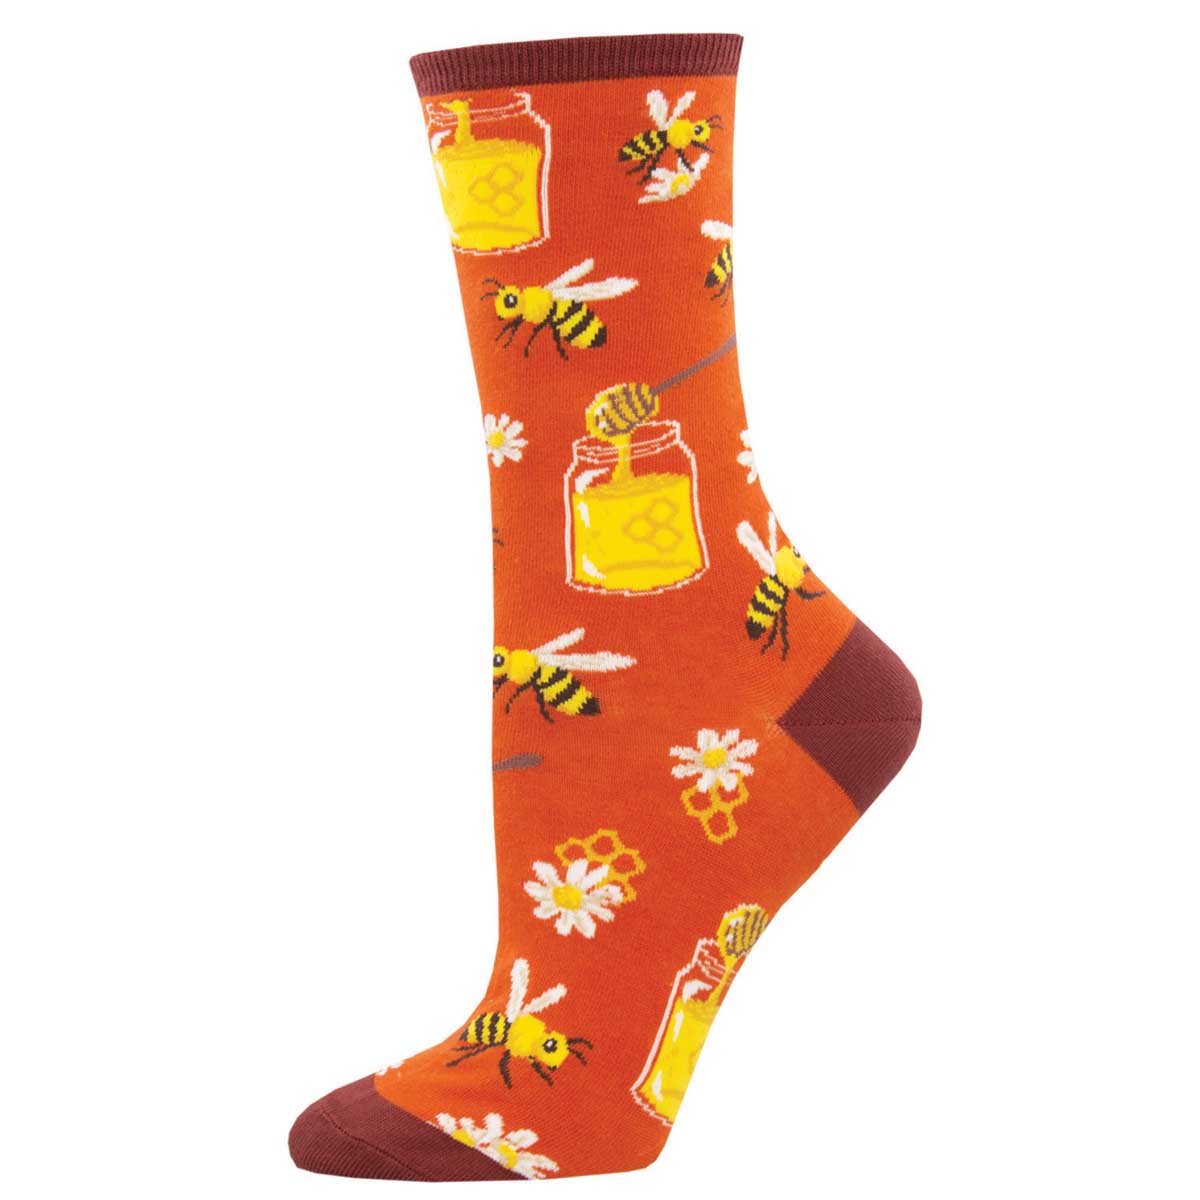 Women's Crew Socks - Bee My Honey Socks